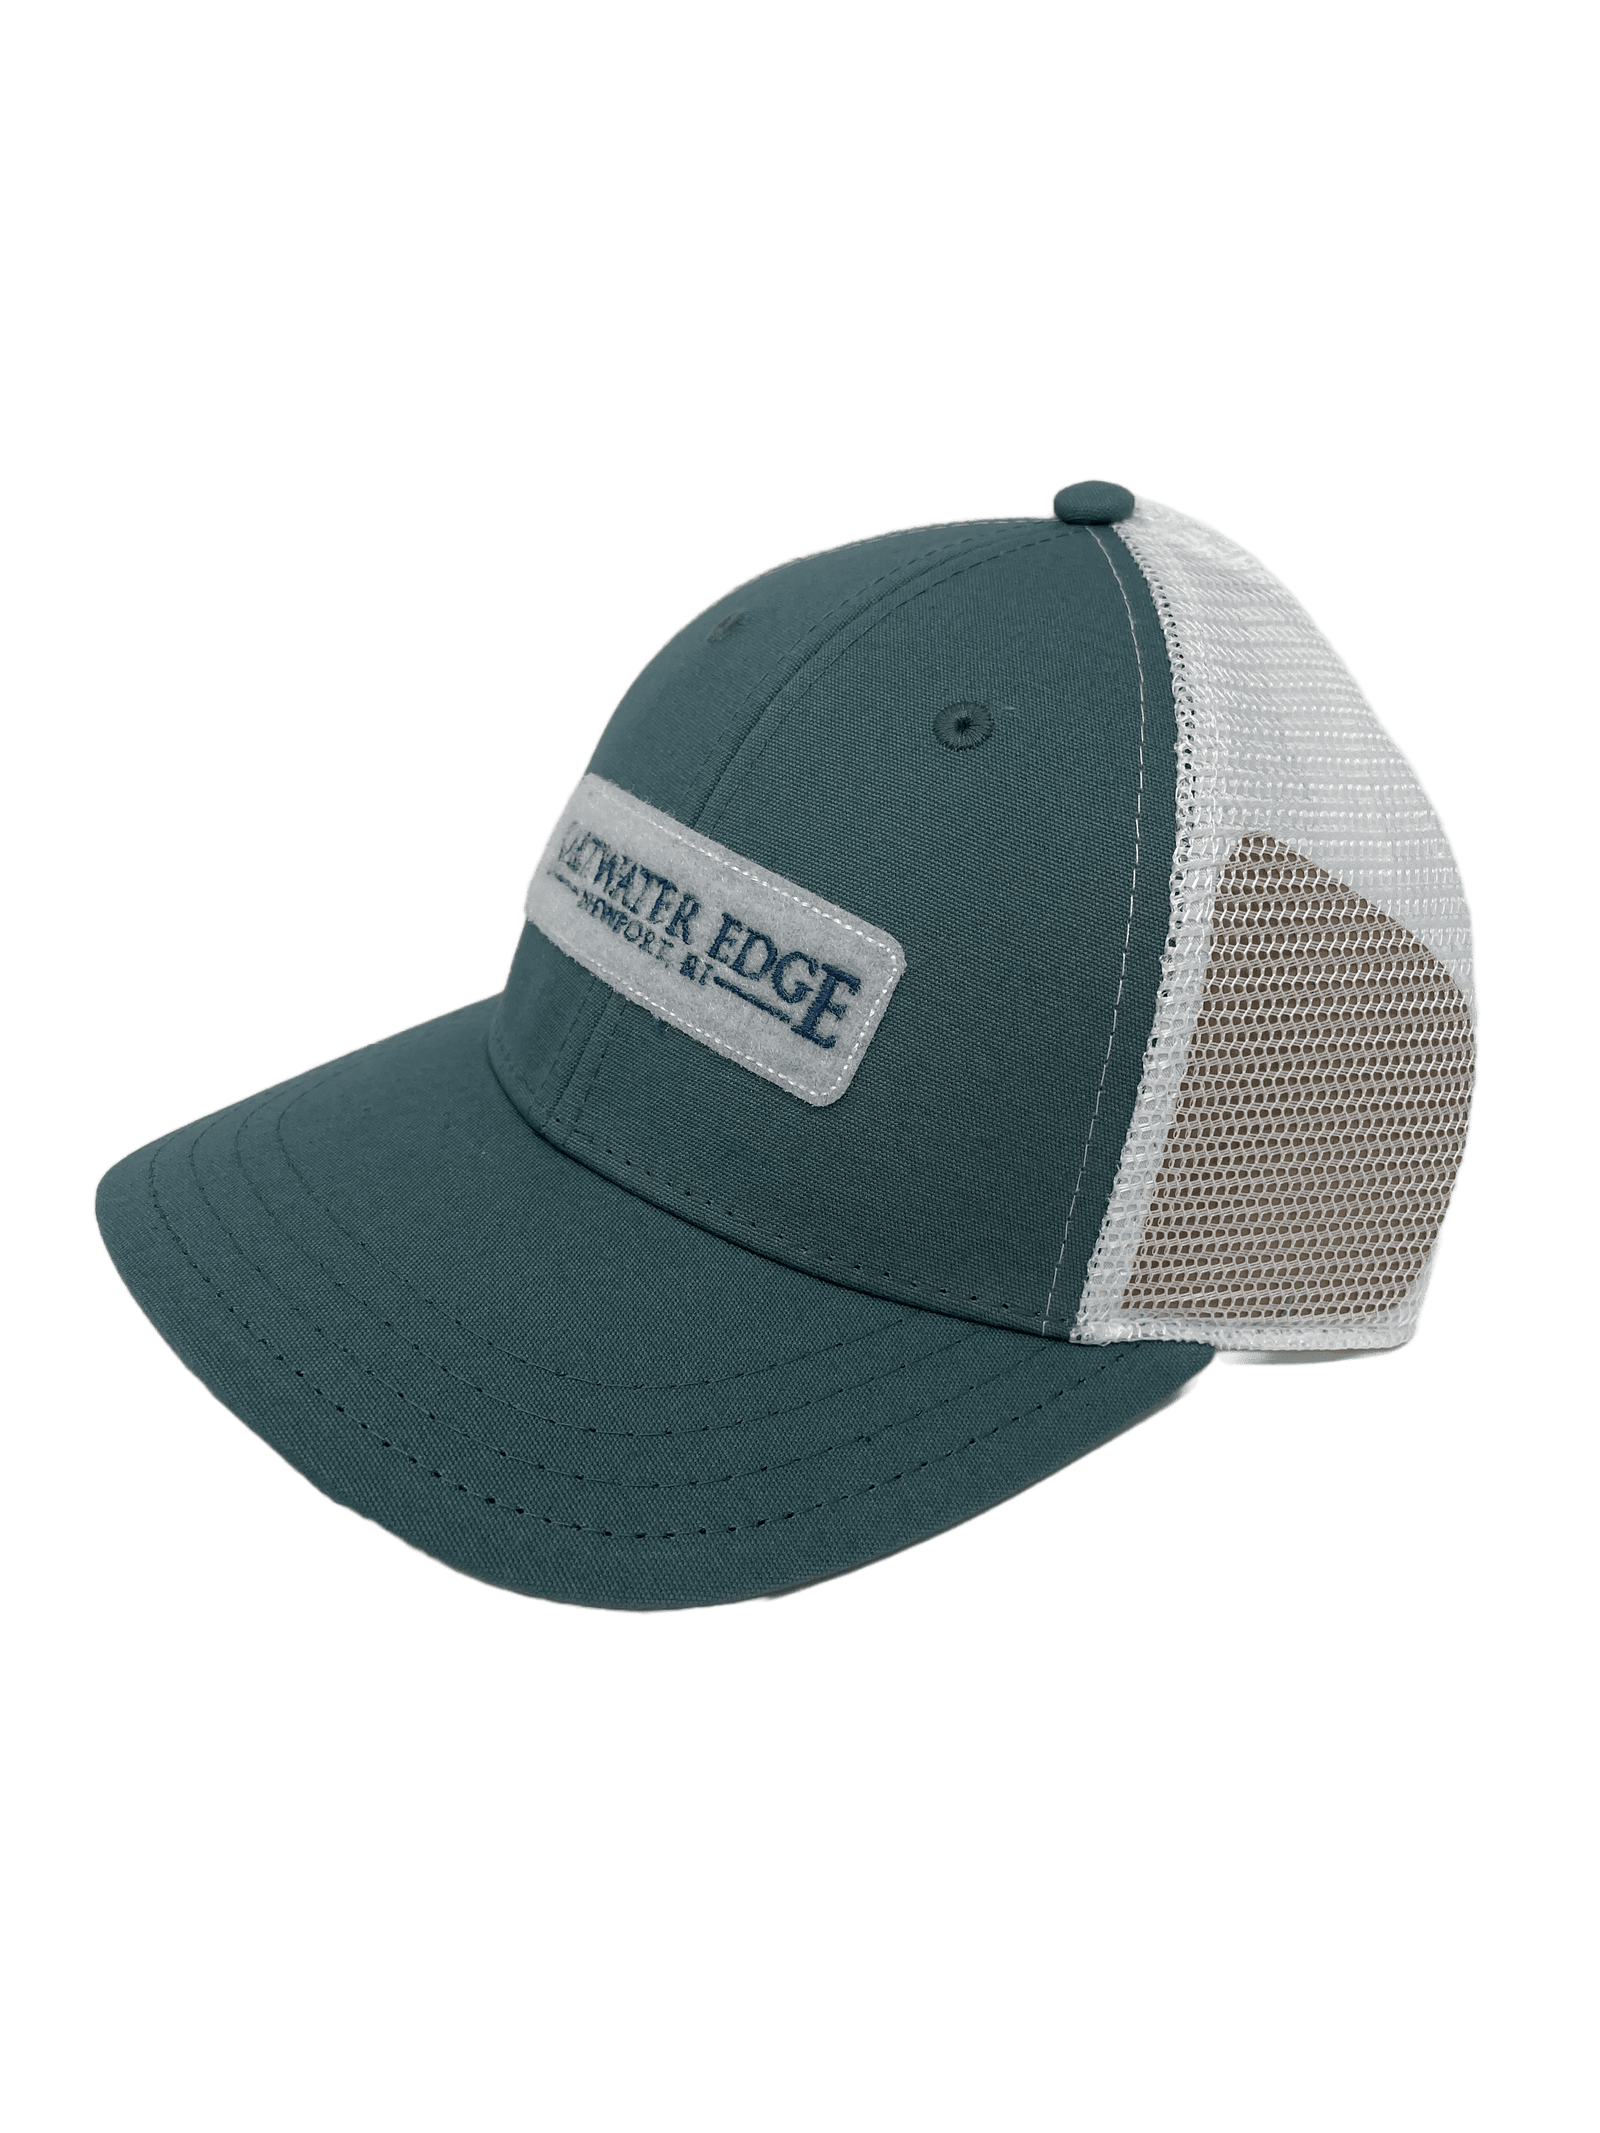 New Fishing Gear Tagged trucker hat - The Saltwater Edge